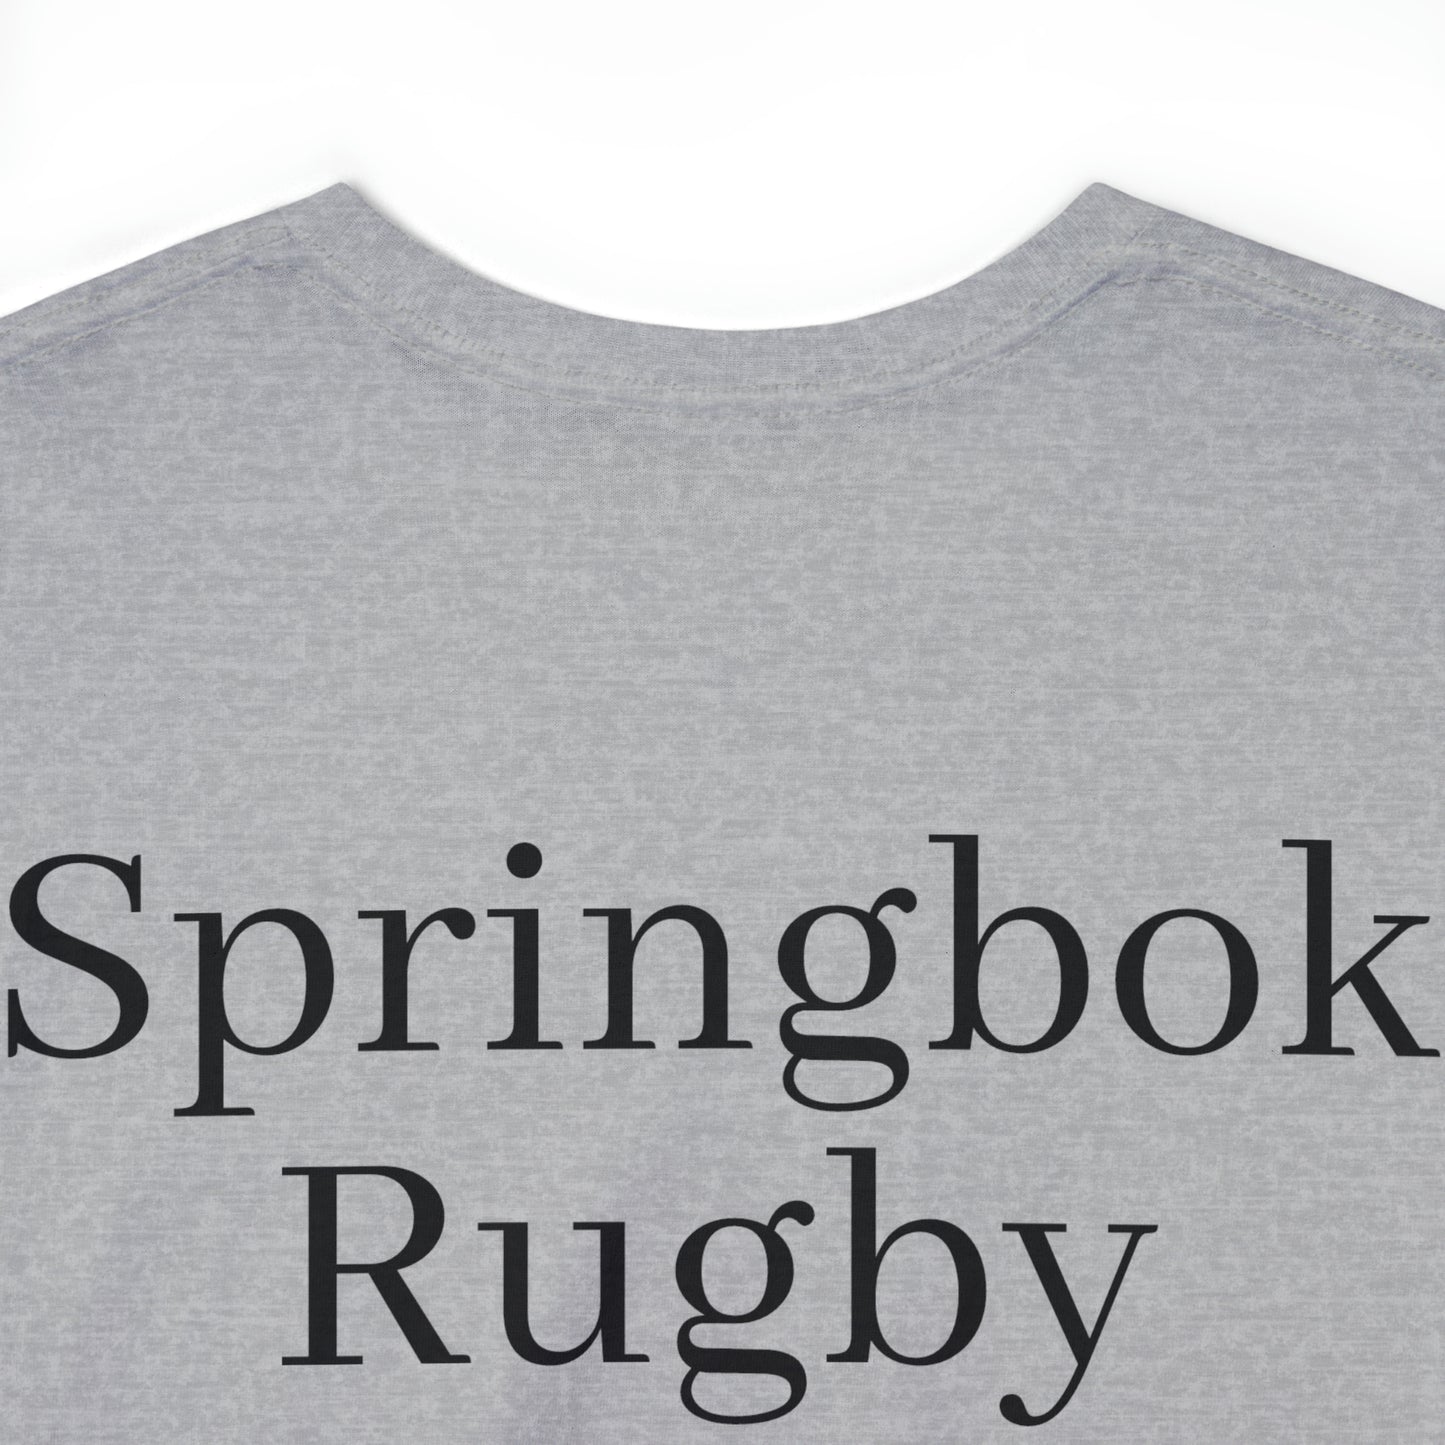 Springboks Team Photo - light shirts